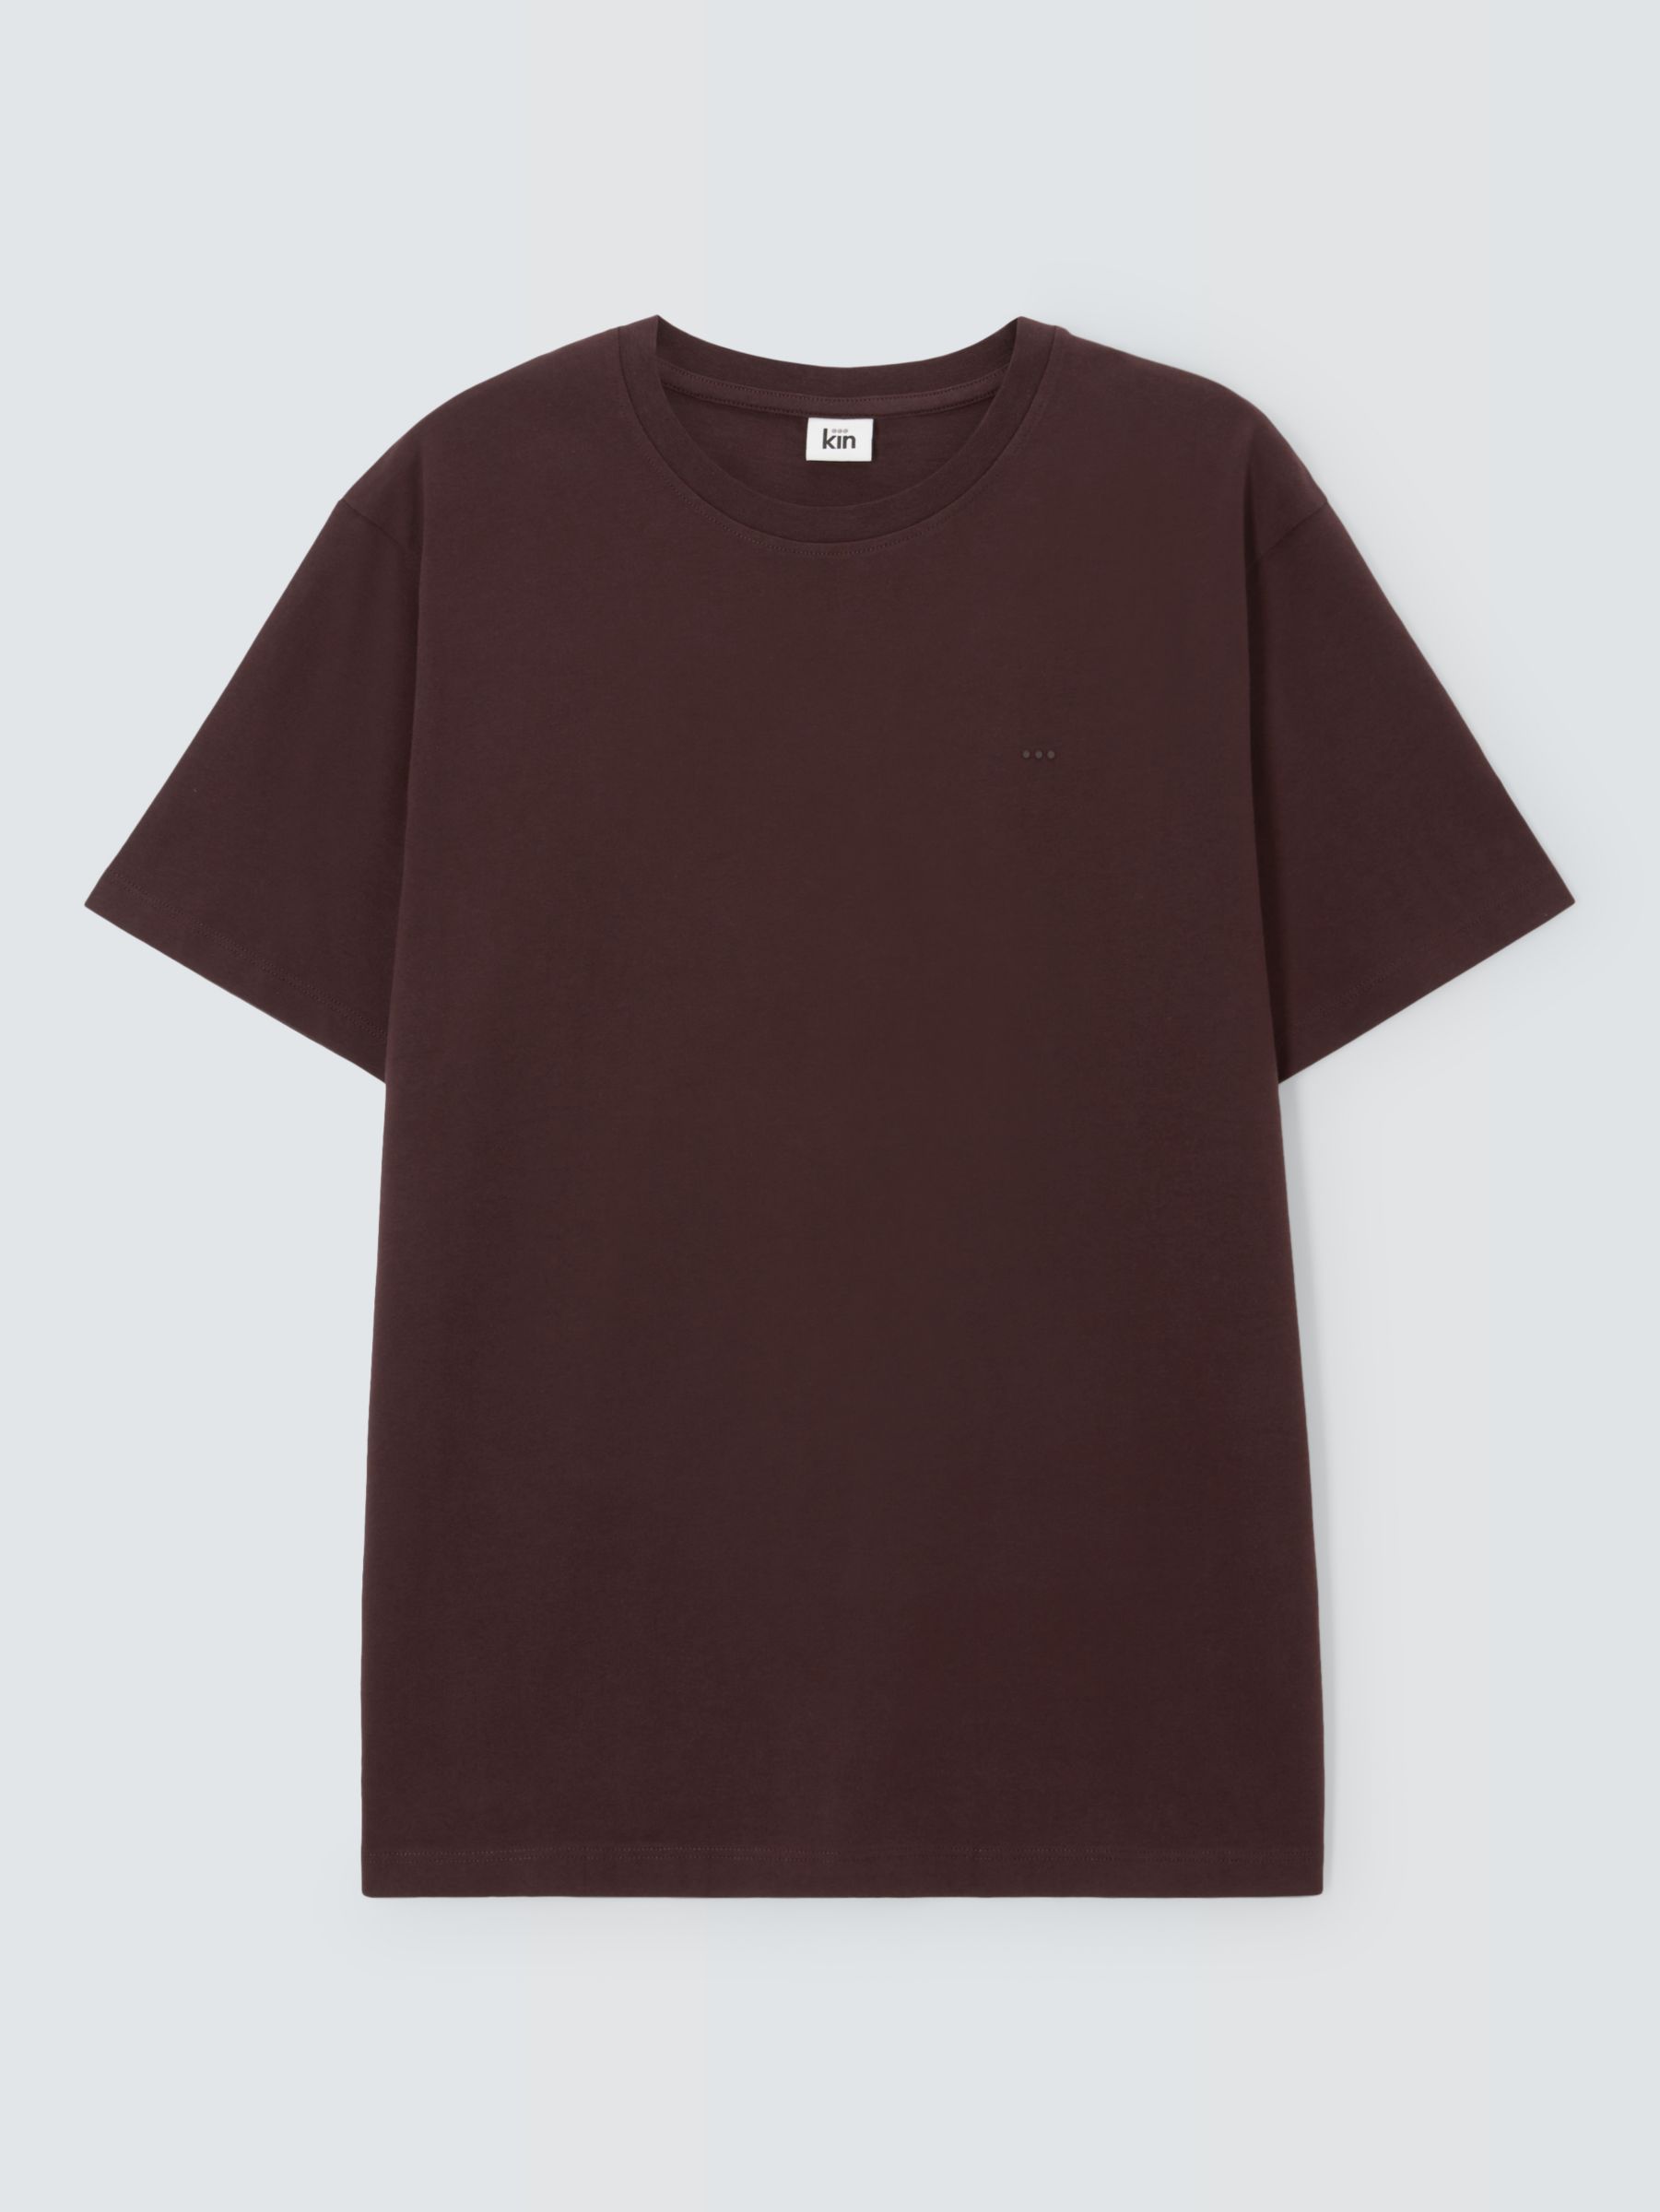 Kin Logo Cotton T-Shirt, Chocolate Plum, S